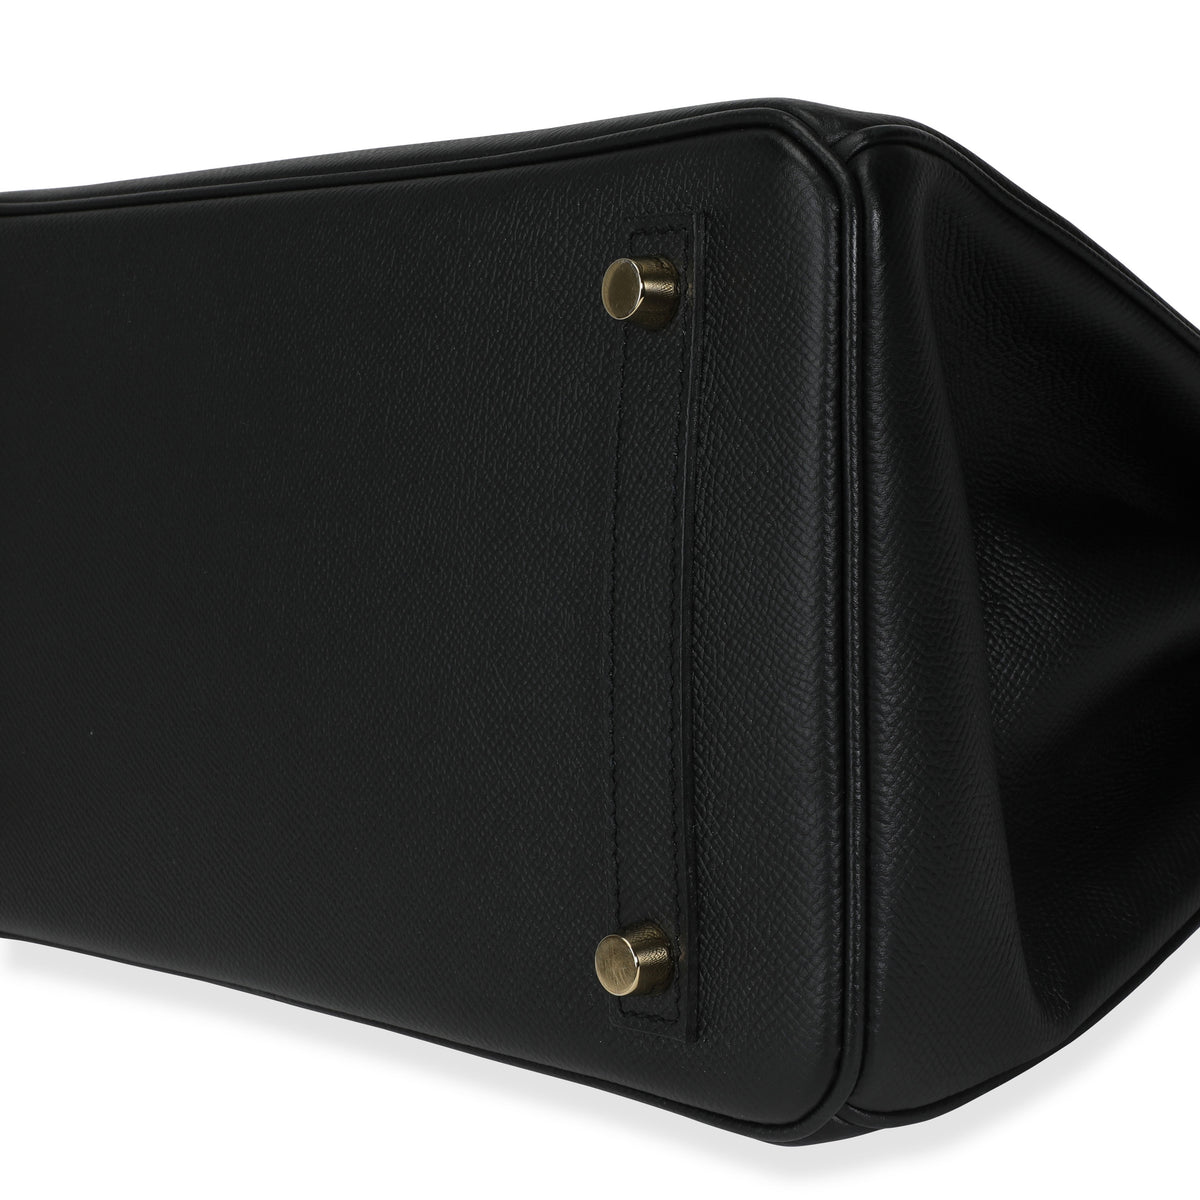 Hermès Black Epsom Birkin 30 with Gold Hardware